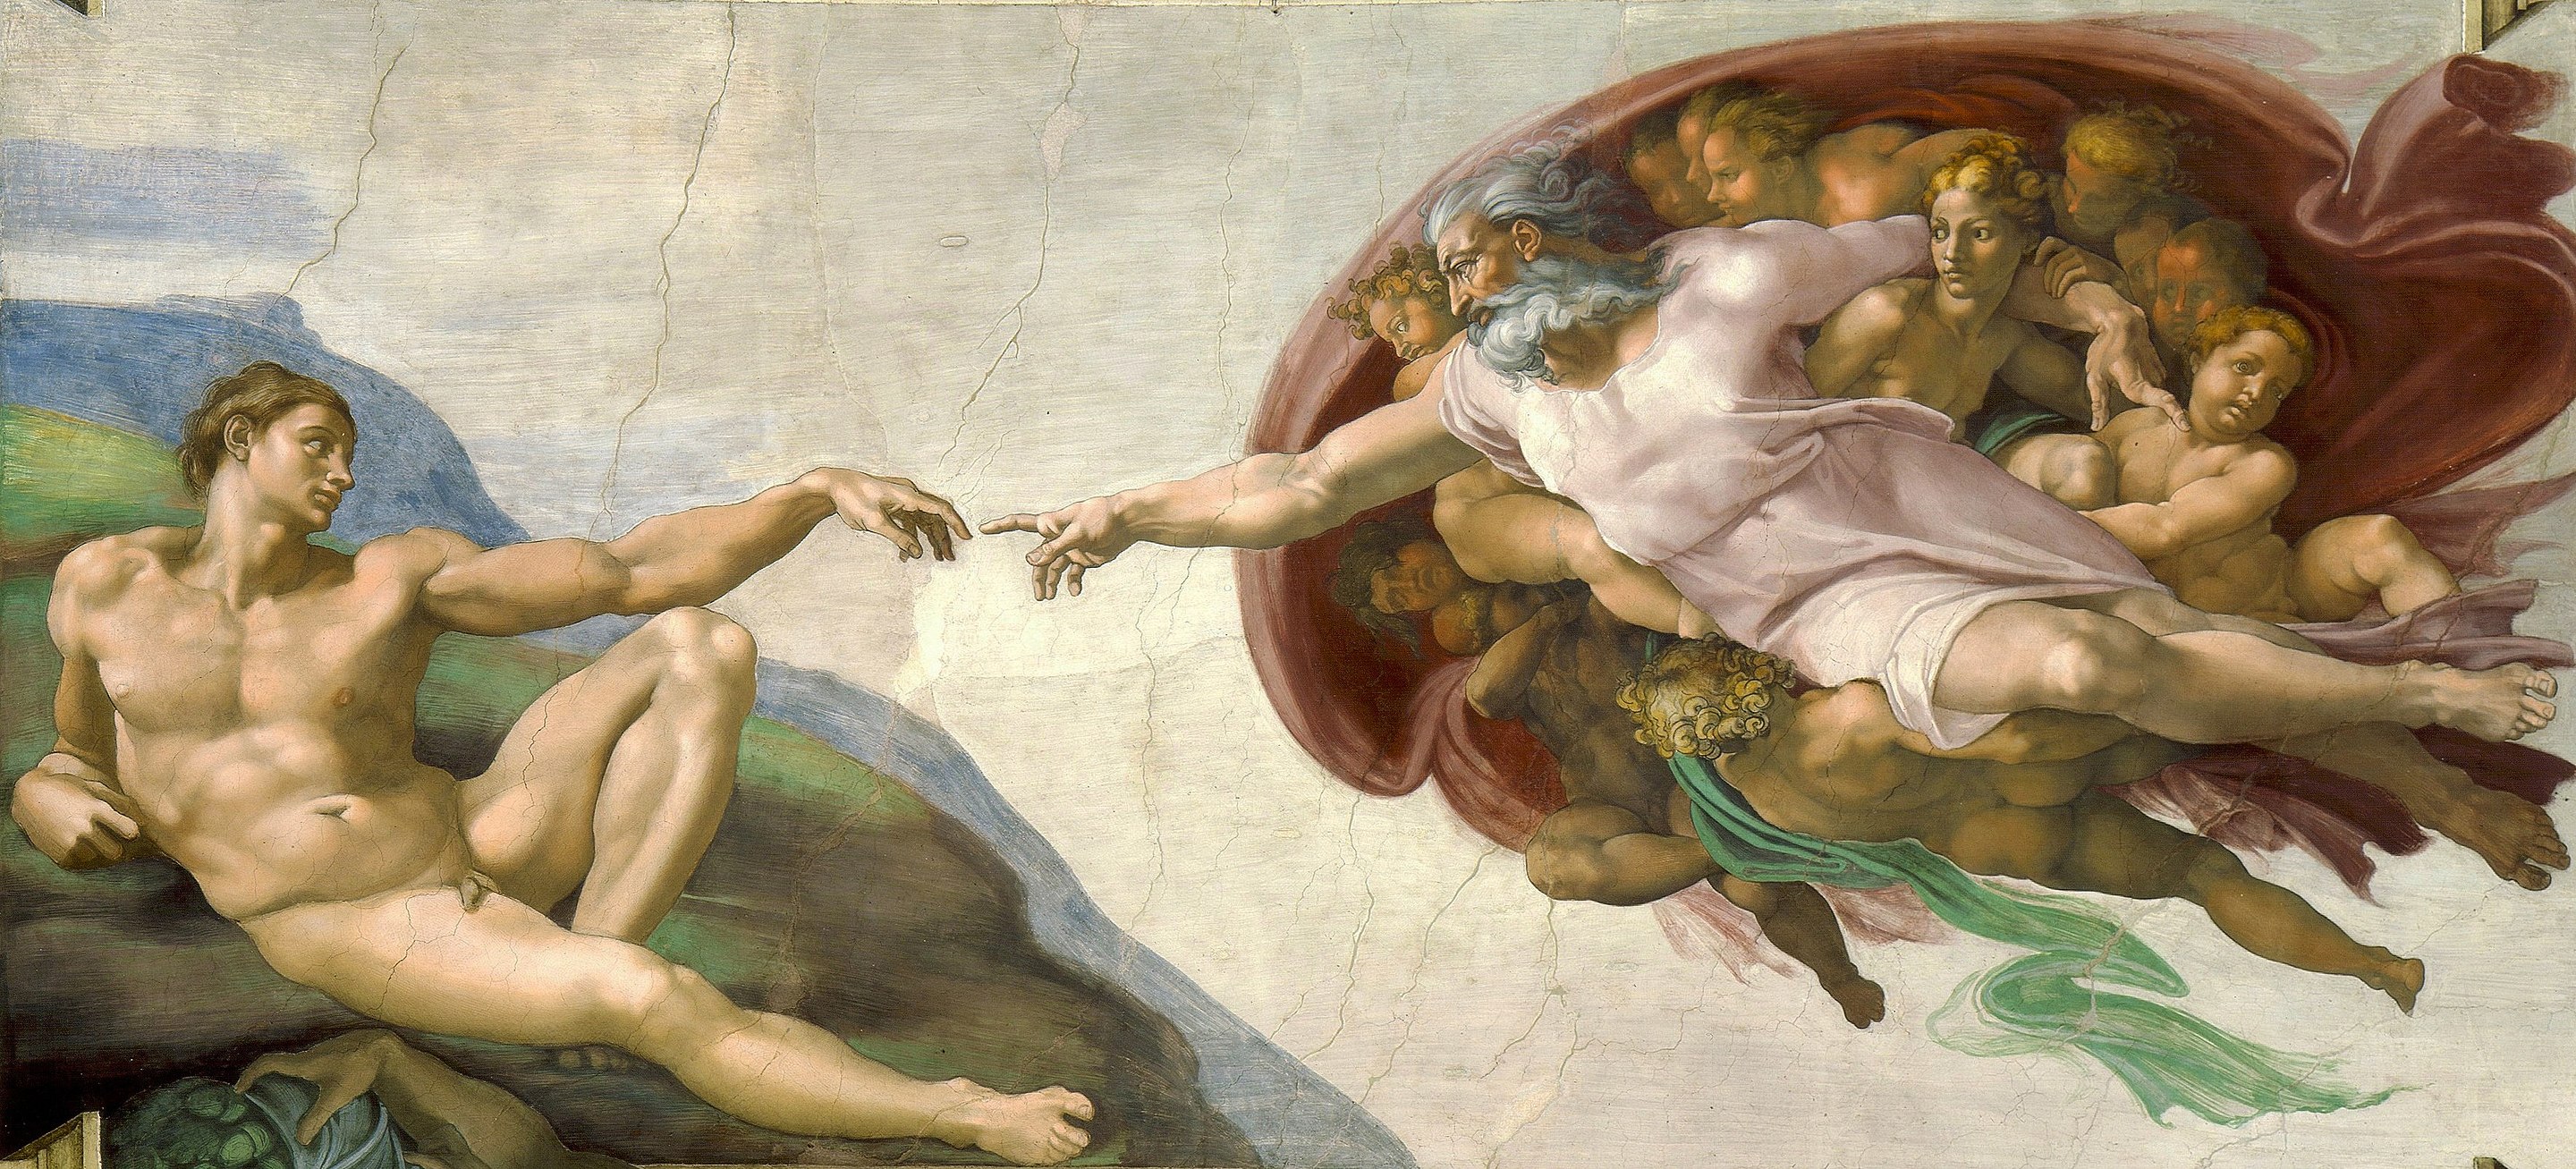 Mastery - Michelangelo's Creation of Adam